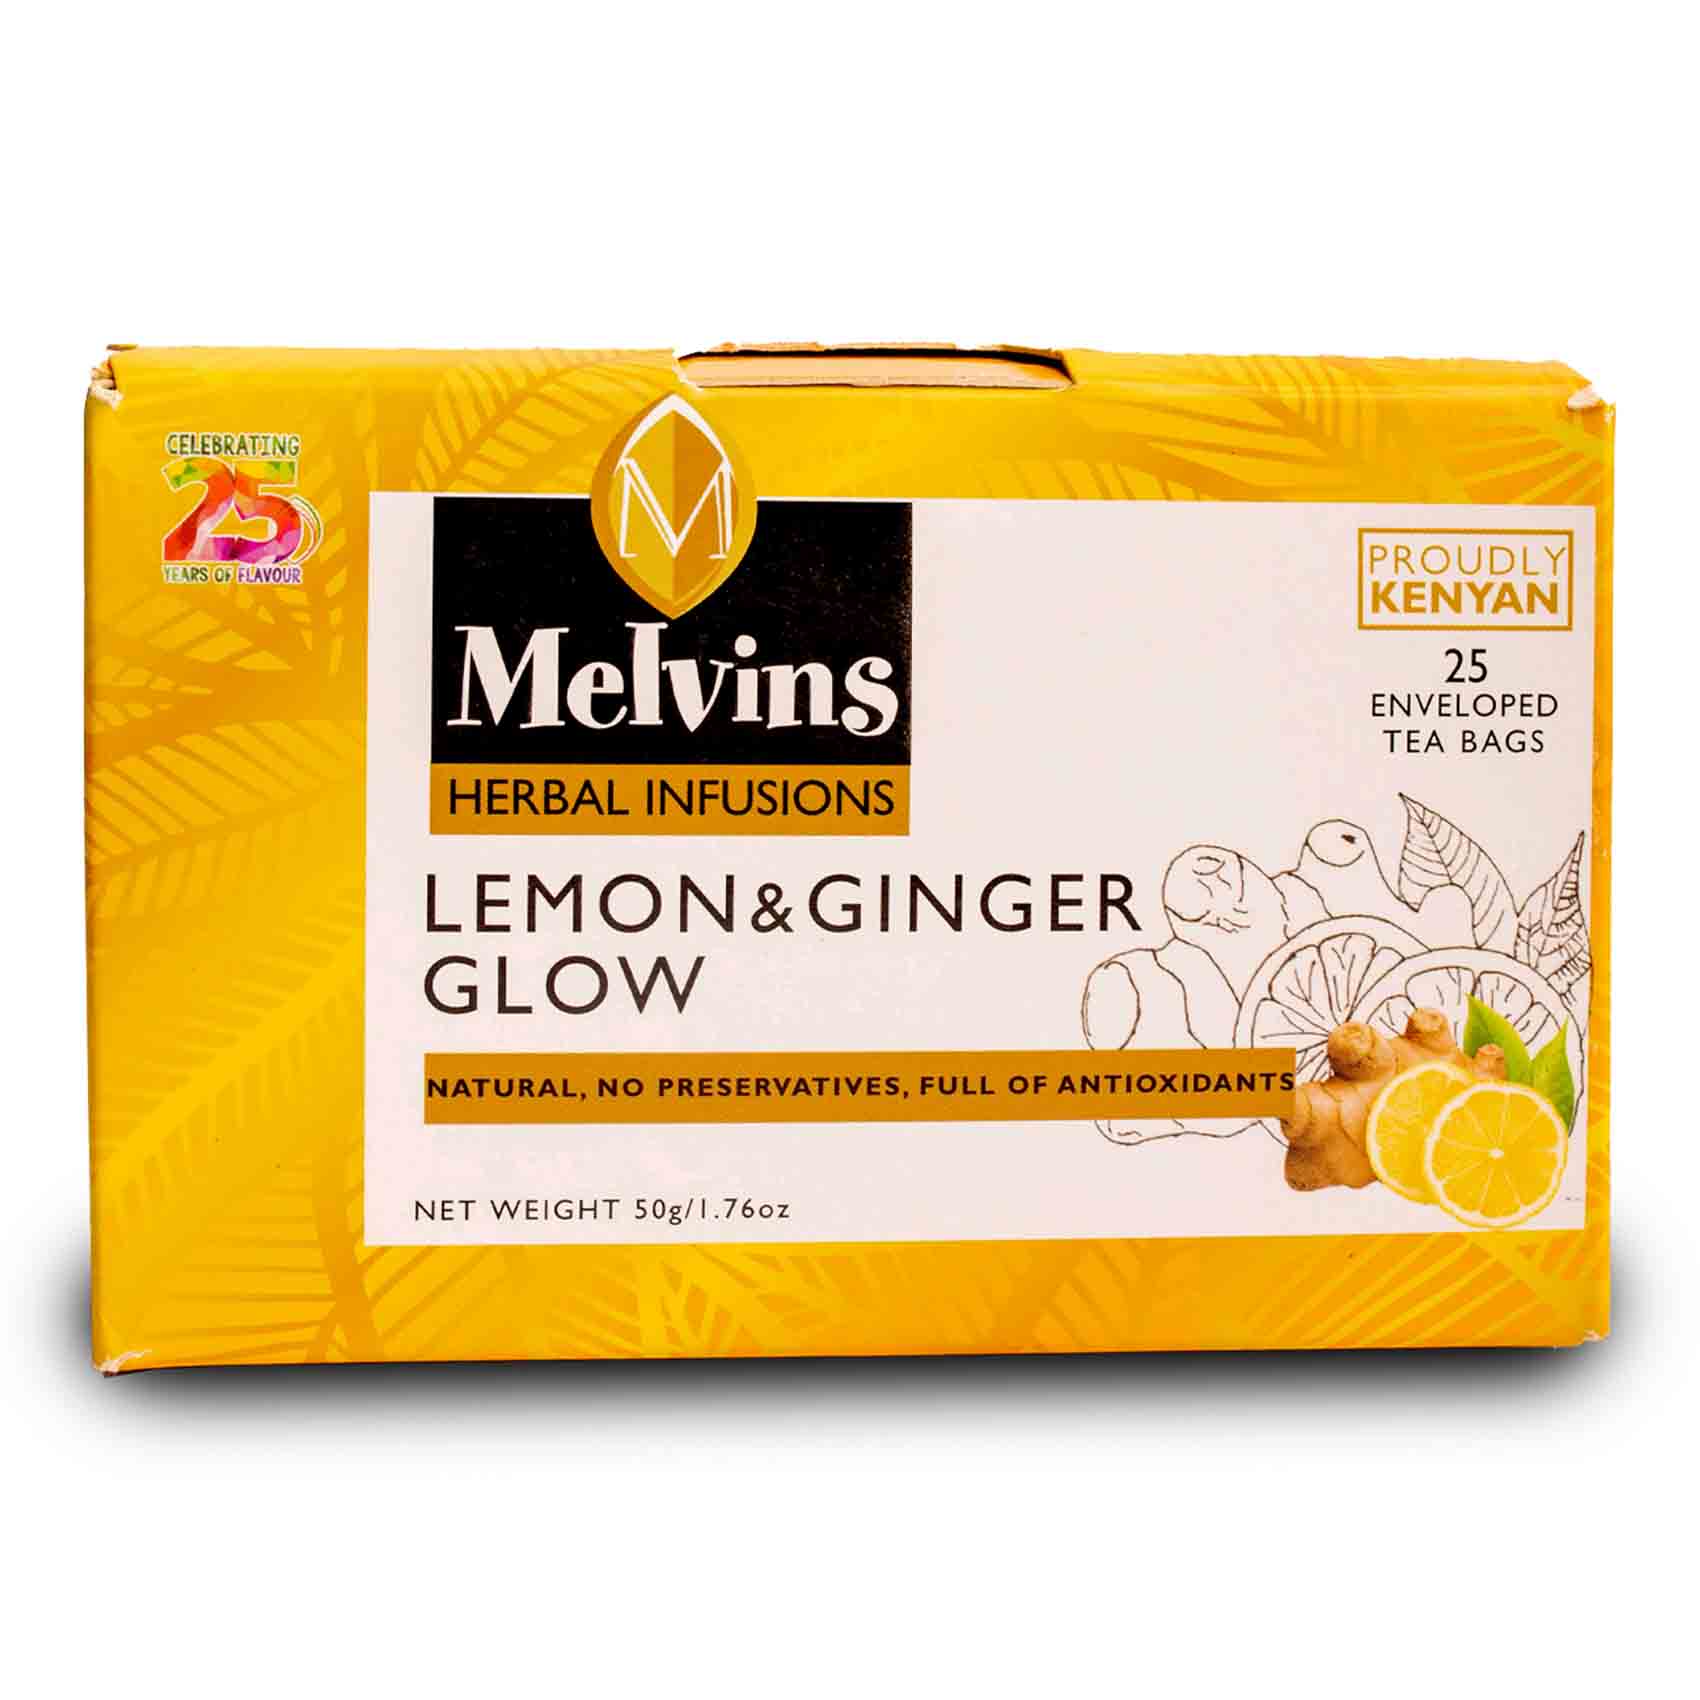 Melvins Lemon and Ginger Tea Bags 25 Count